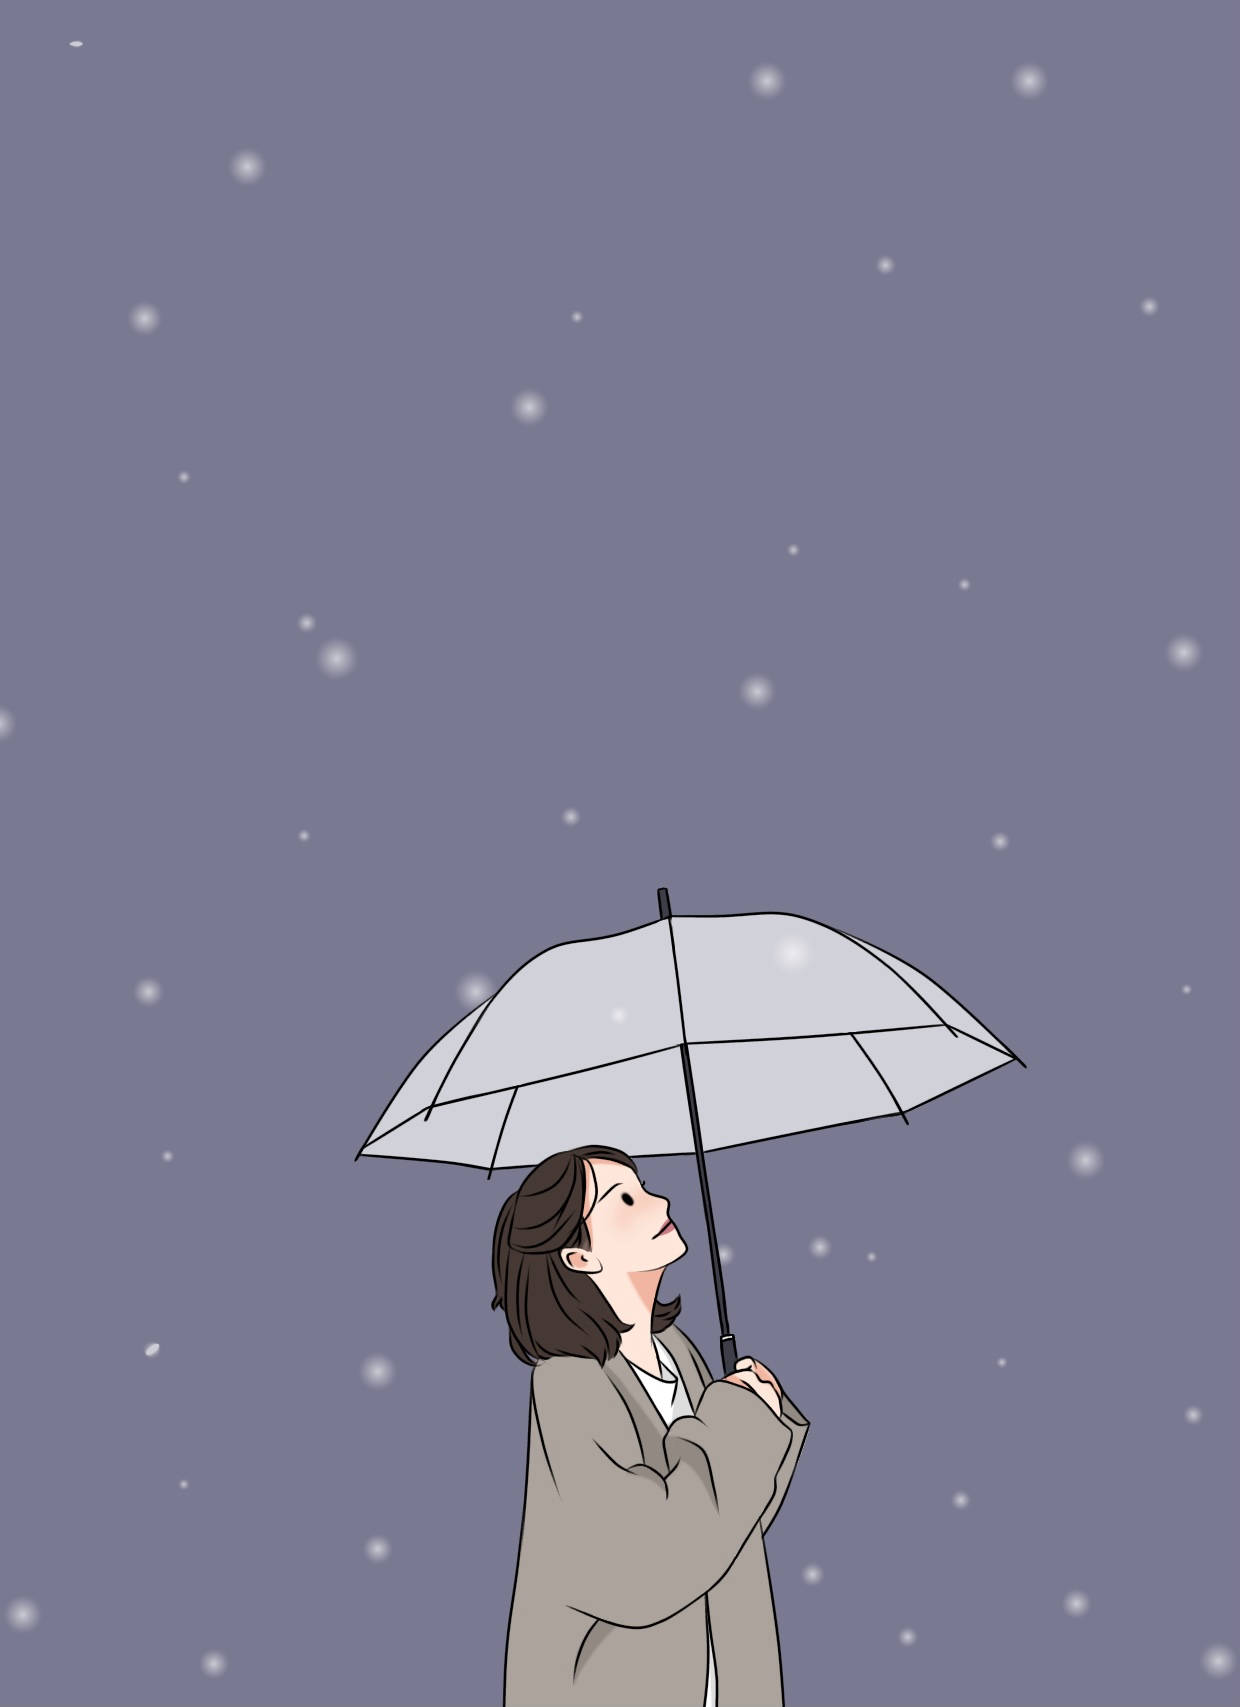 Aesthetic Girl With Umbrella Background